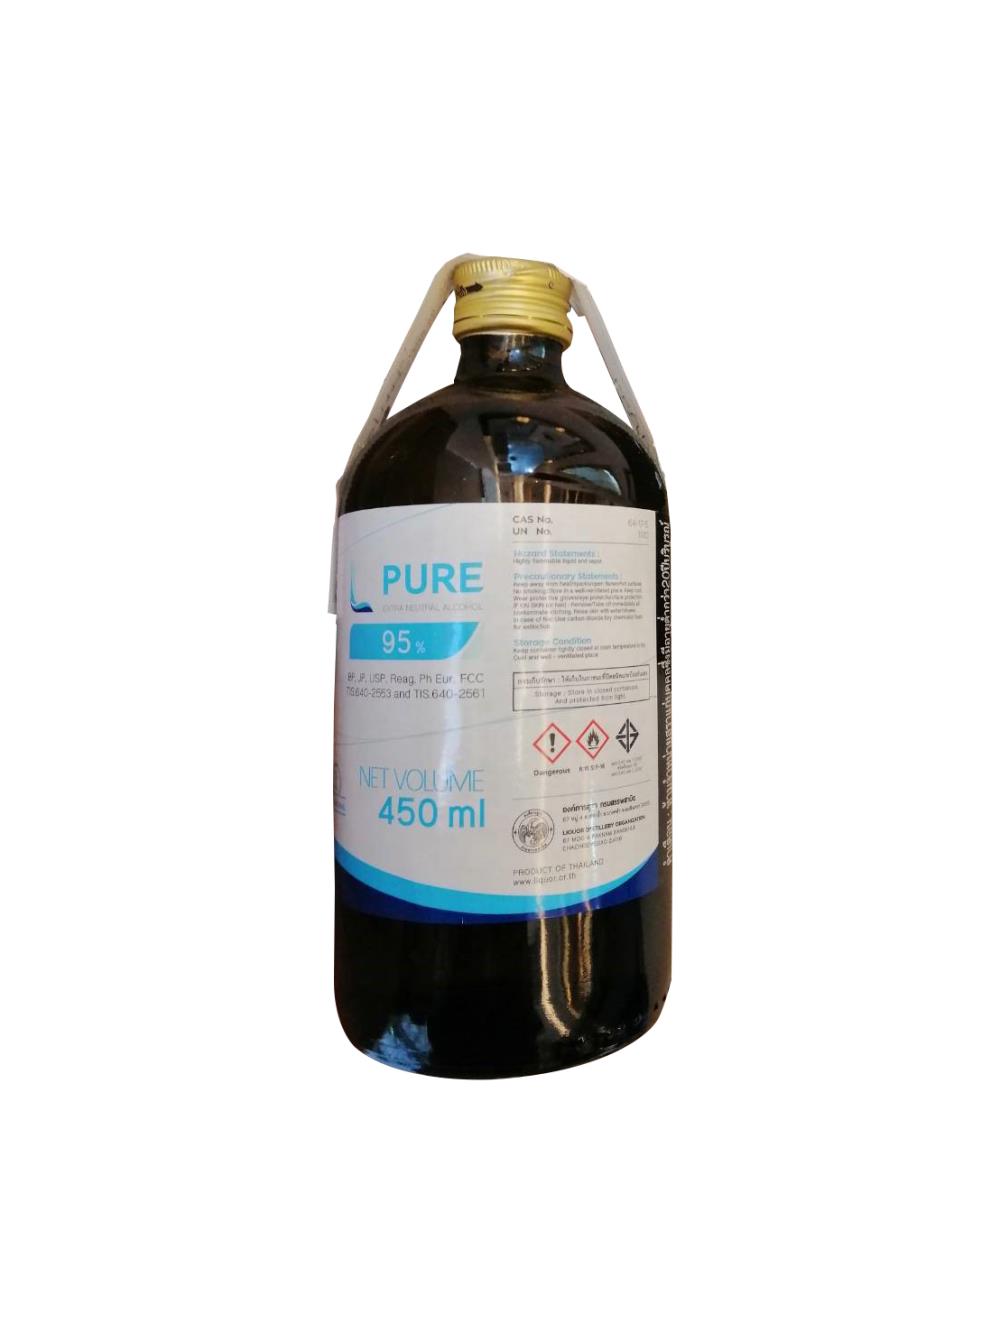 L Pure 95% (Ethyl Alcohol 95% Food Grade / Extra Natural Ethyl Alcohol),Ethyl Alcohol,L PURE,Chemicals/Alcohols